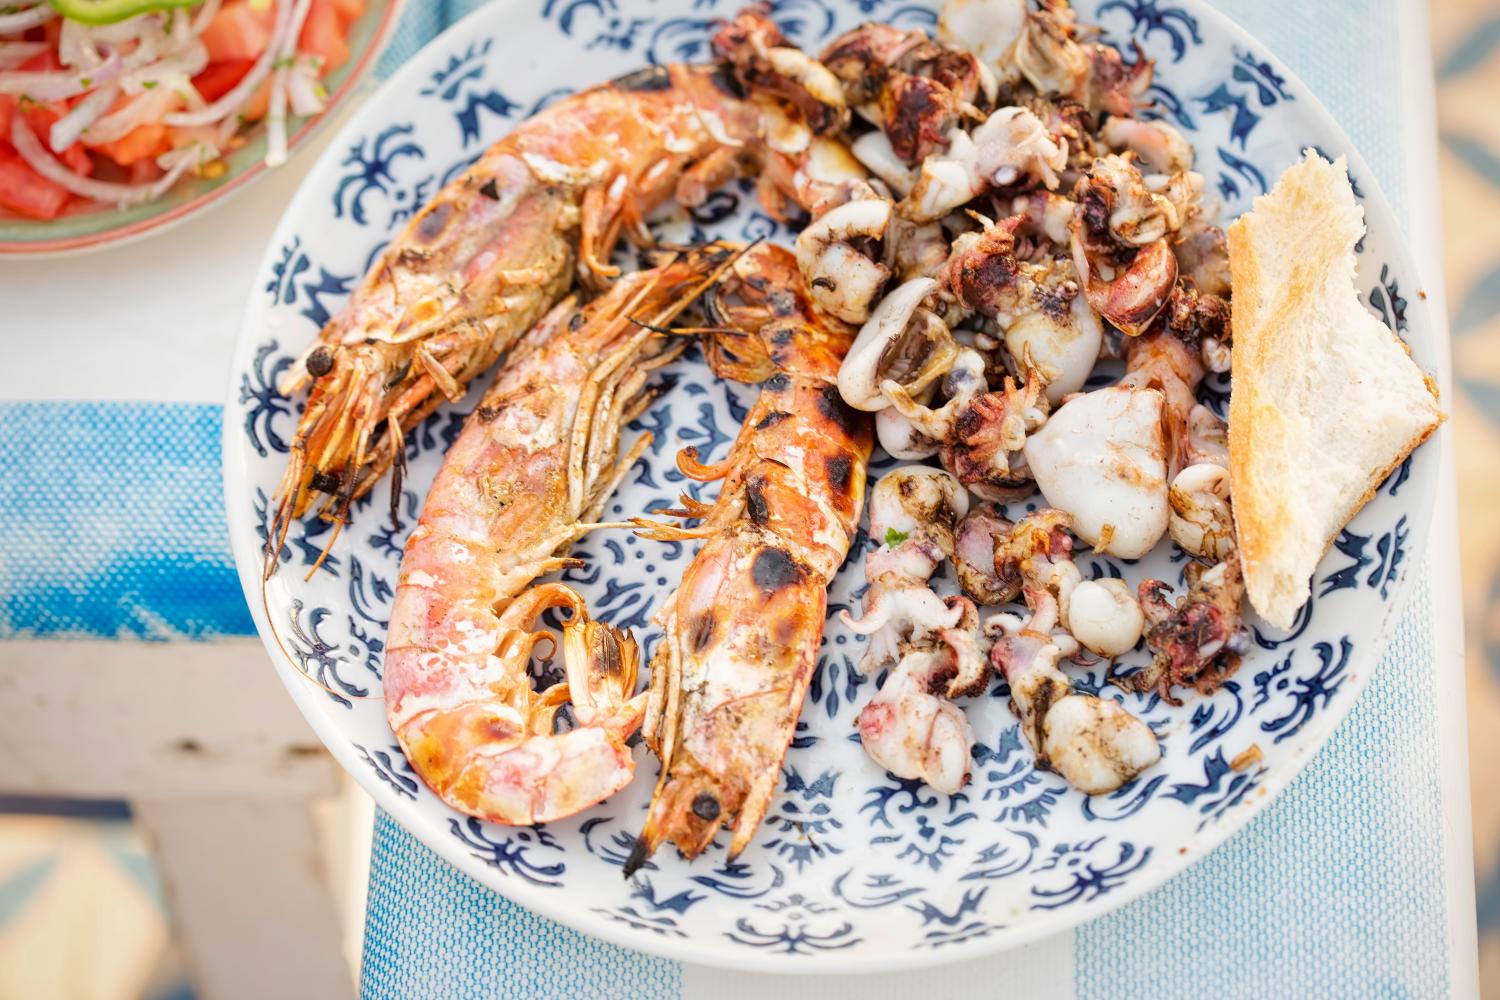 Seafood plate, Essaouira village, Morocco